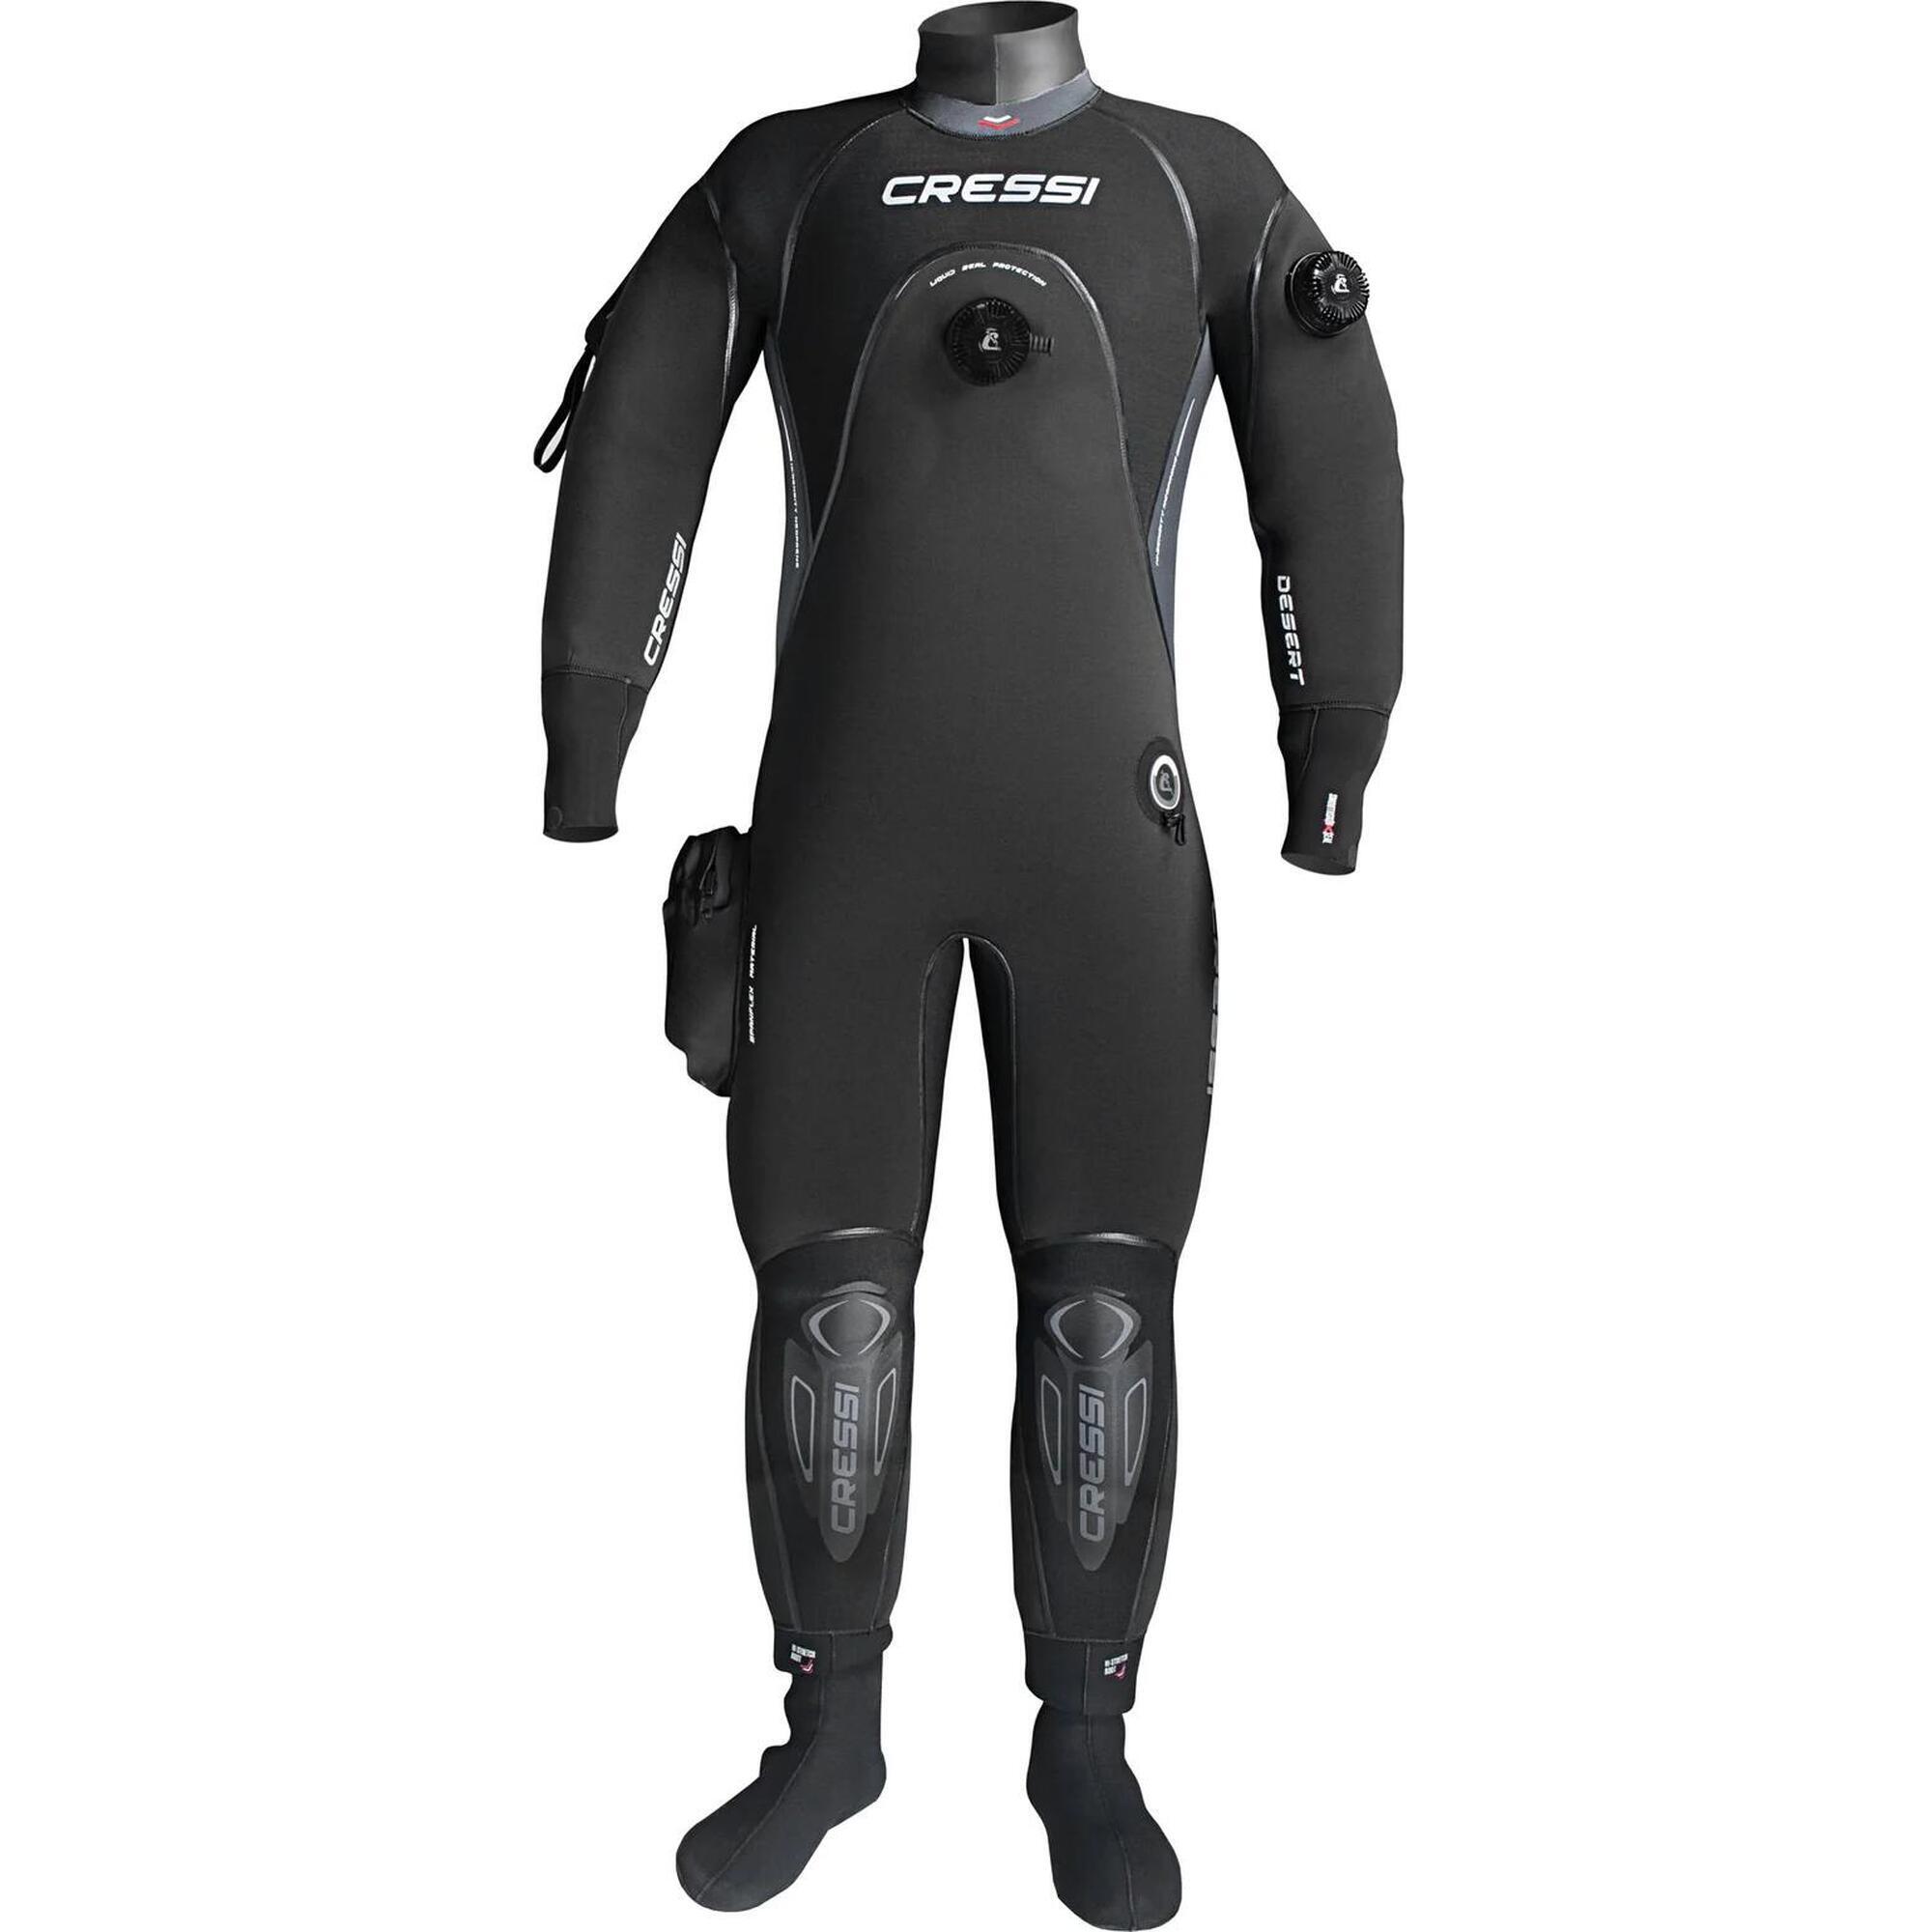 Desert Drysuit 男士高密度幹式4mm潛水衣 - 黑色